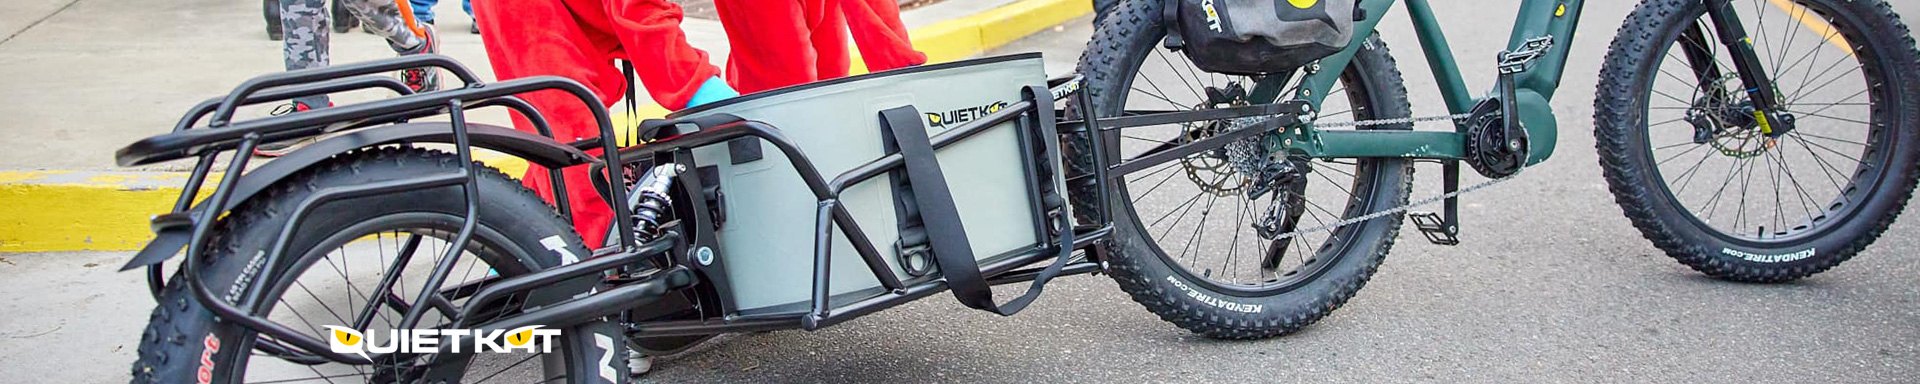 QuietKat Bike Tires, Tubes & Wheels